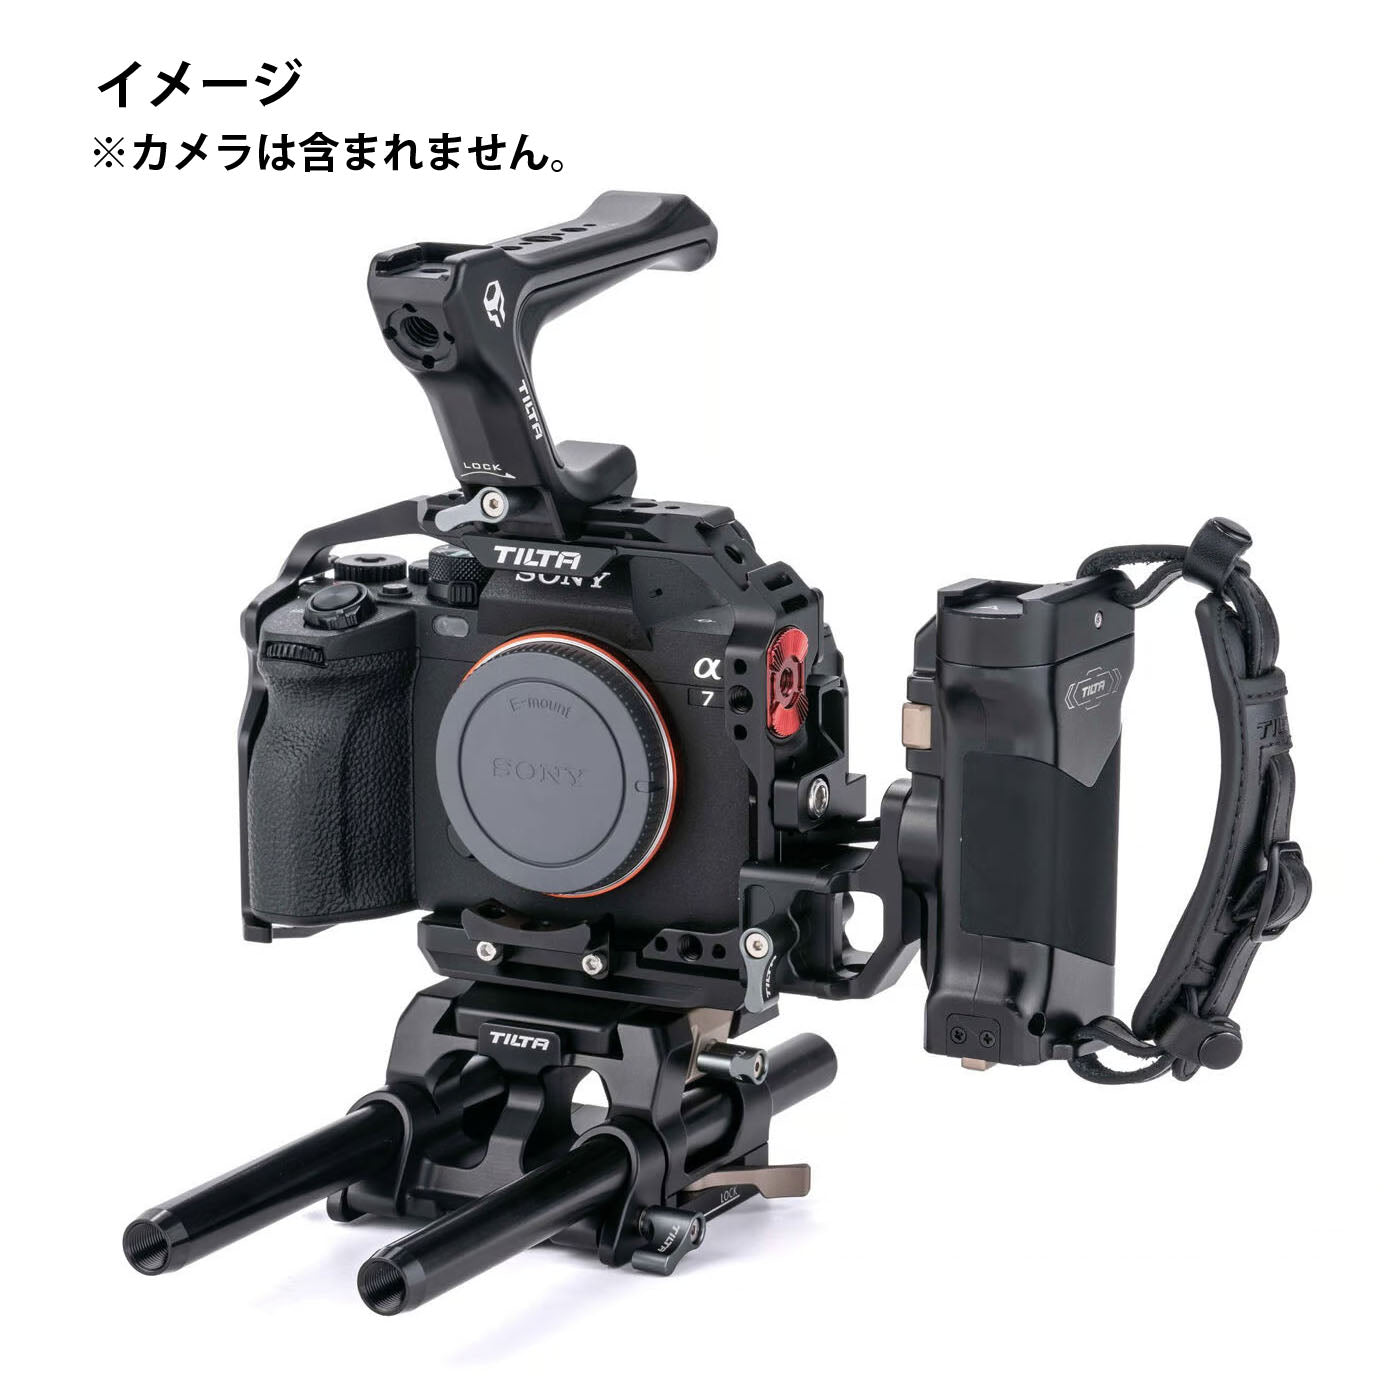 TILTA(ティルタ) Camera Cage for Sony a7 IV Pro Kit - Black TA-T30-B-B